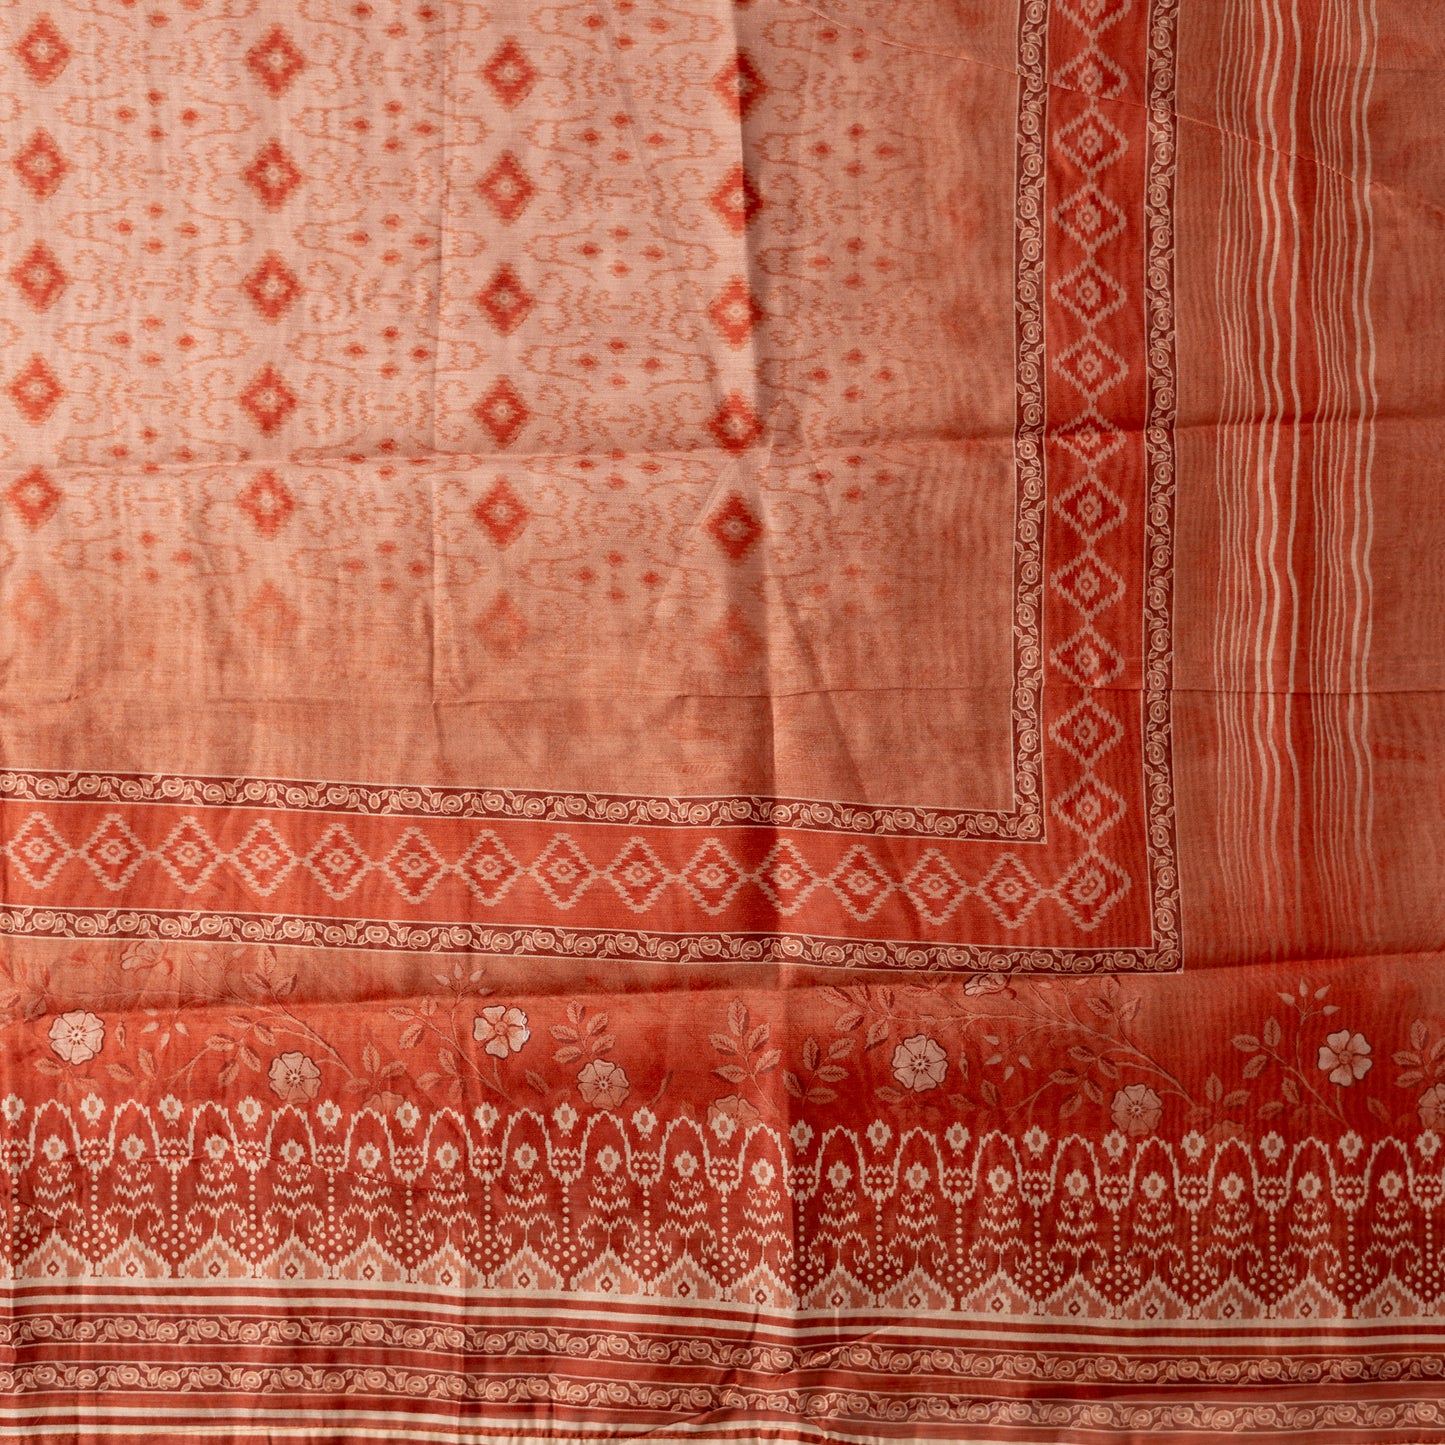 dark orange color silk dupatta with floral prints